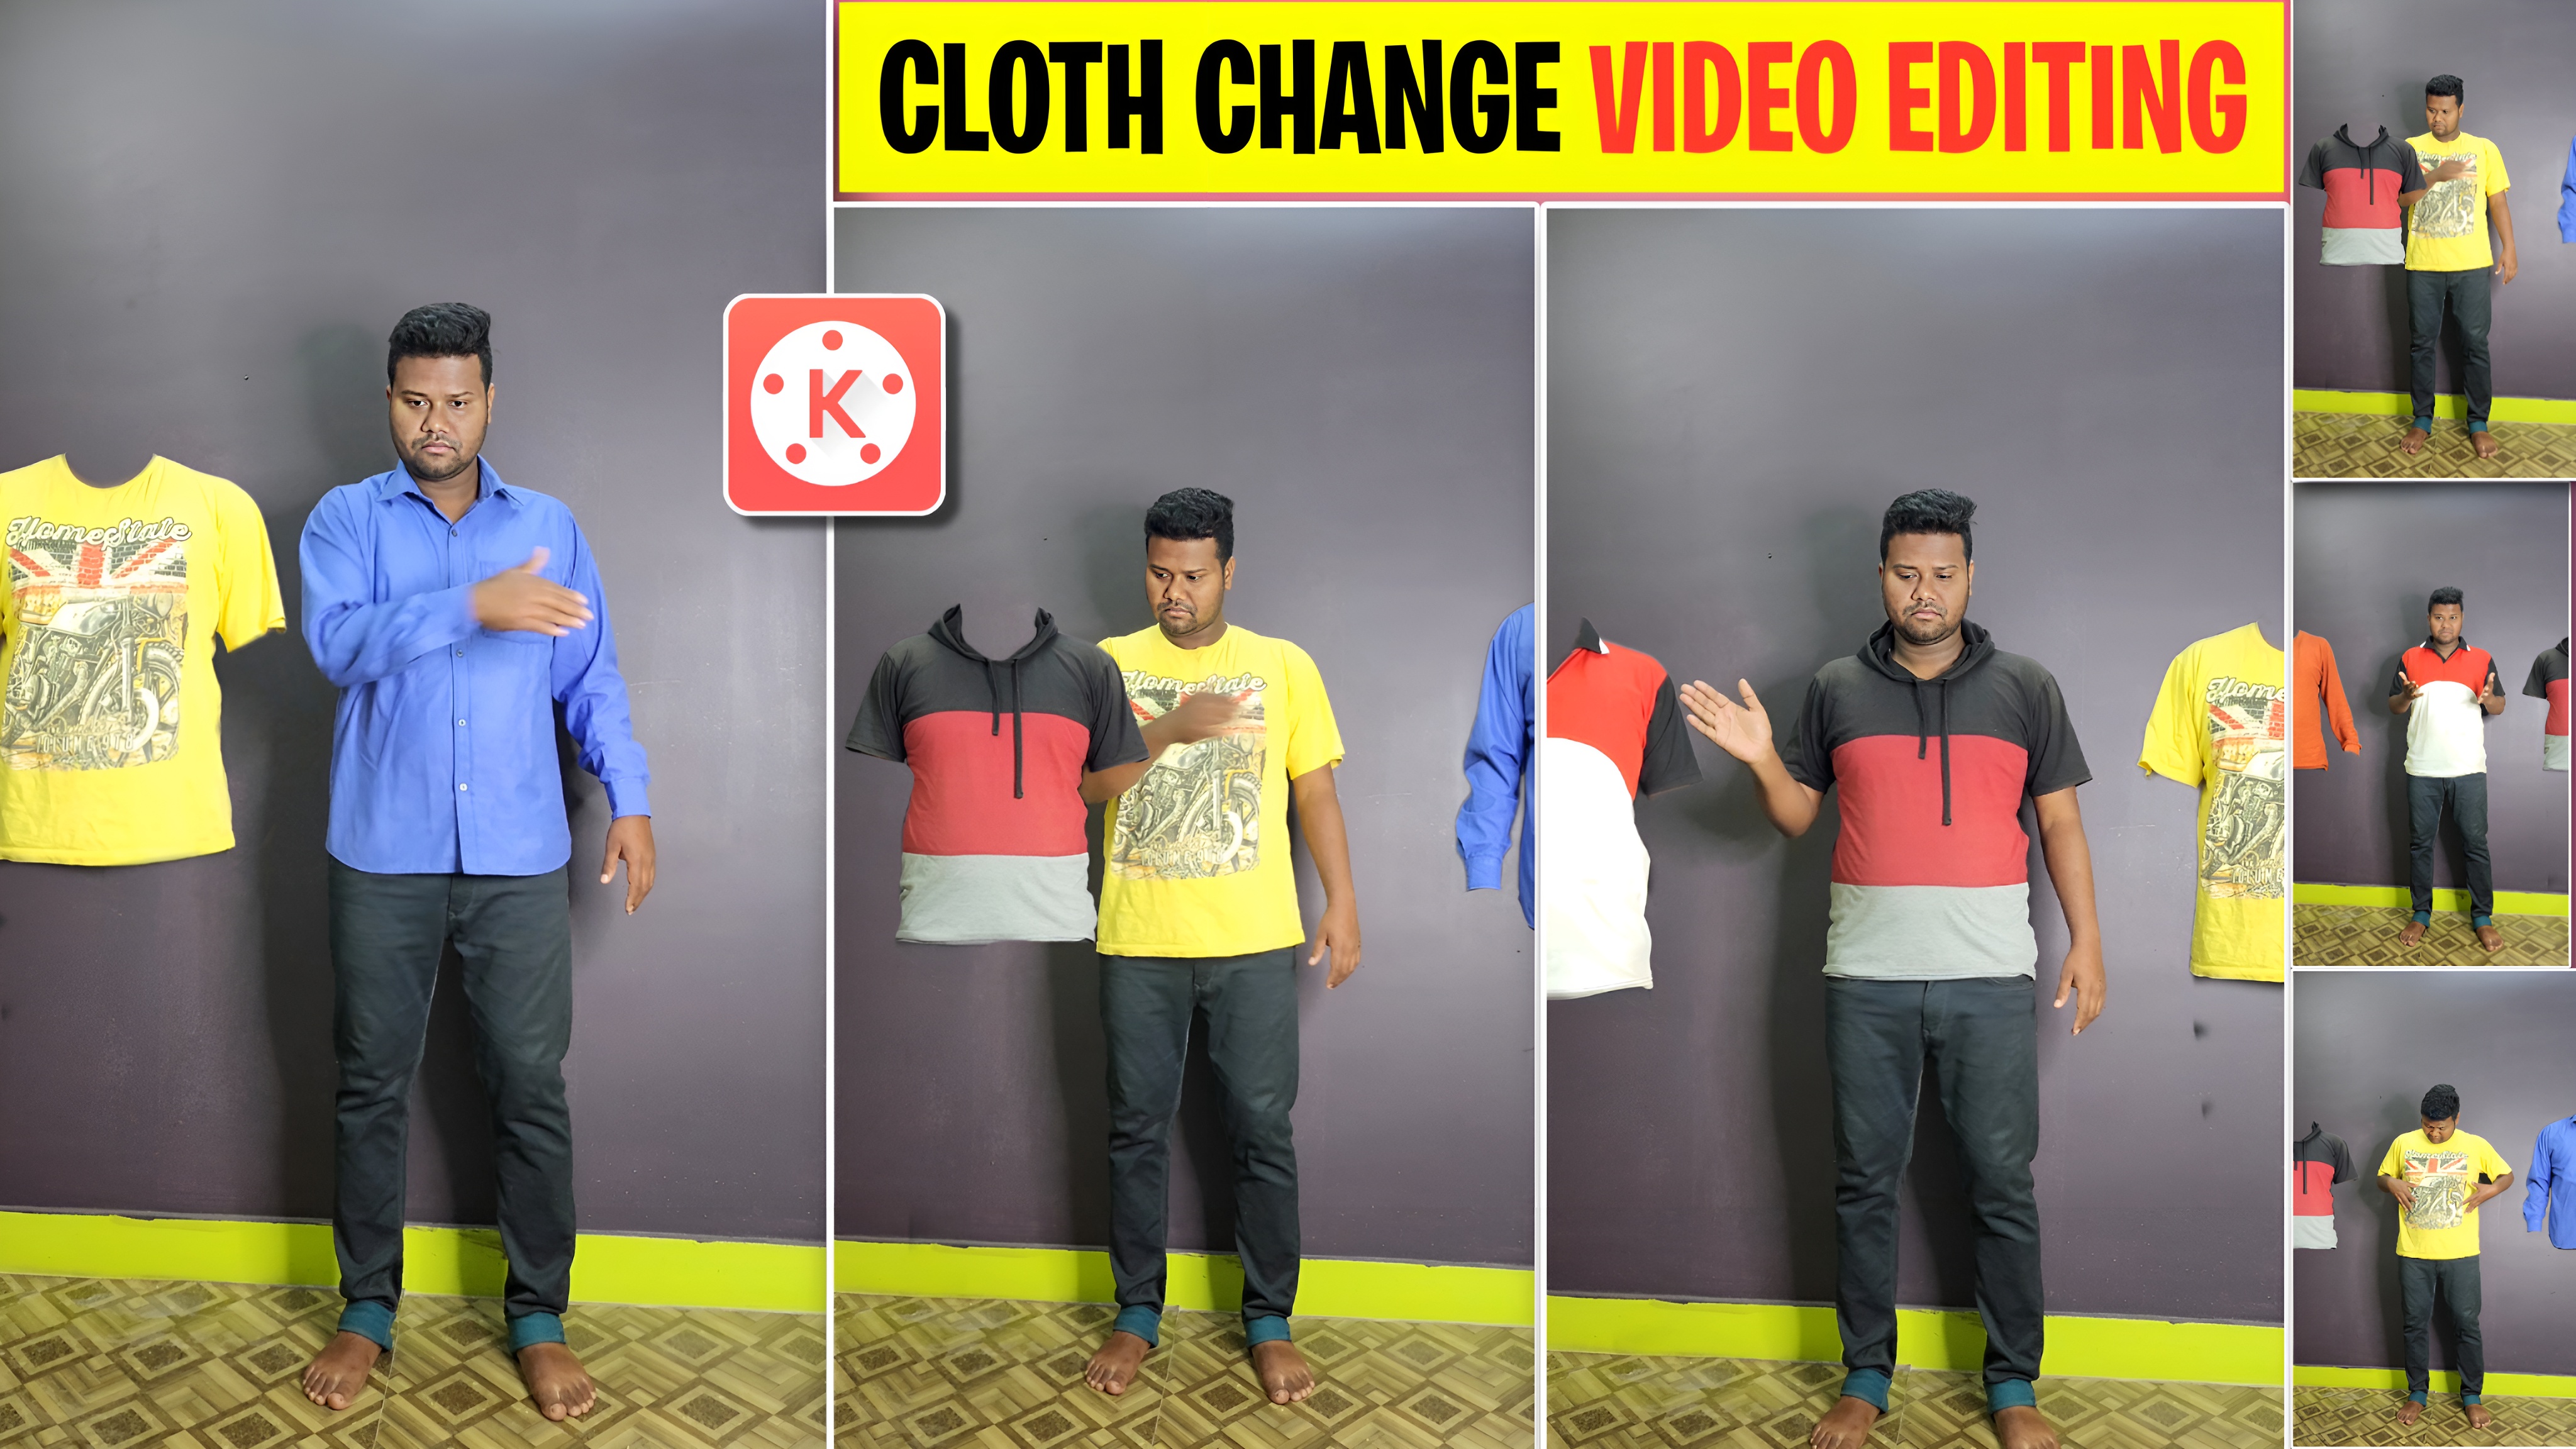 How To Make Cloth Change Video || Dress Change Video Editing Tutorial || Kinemaster Video Editing